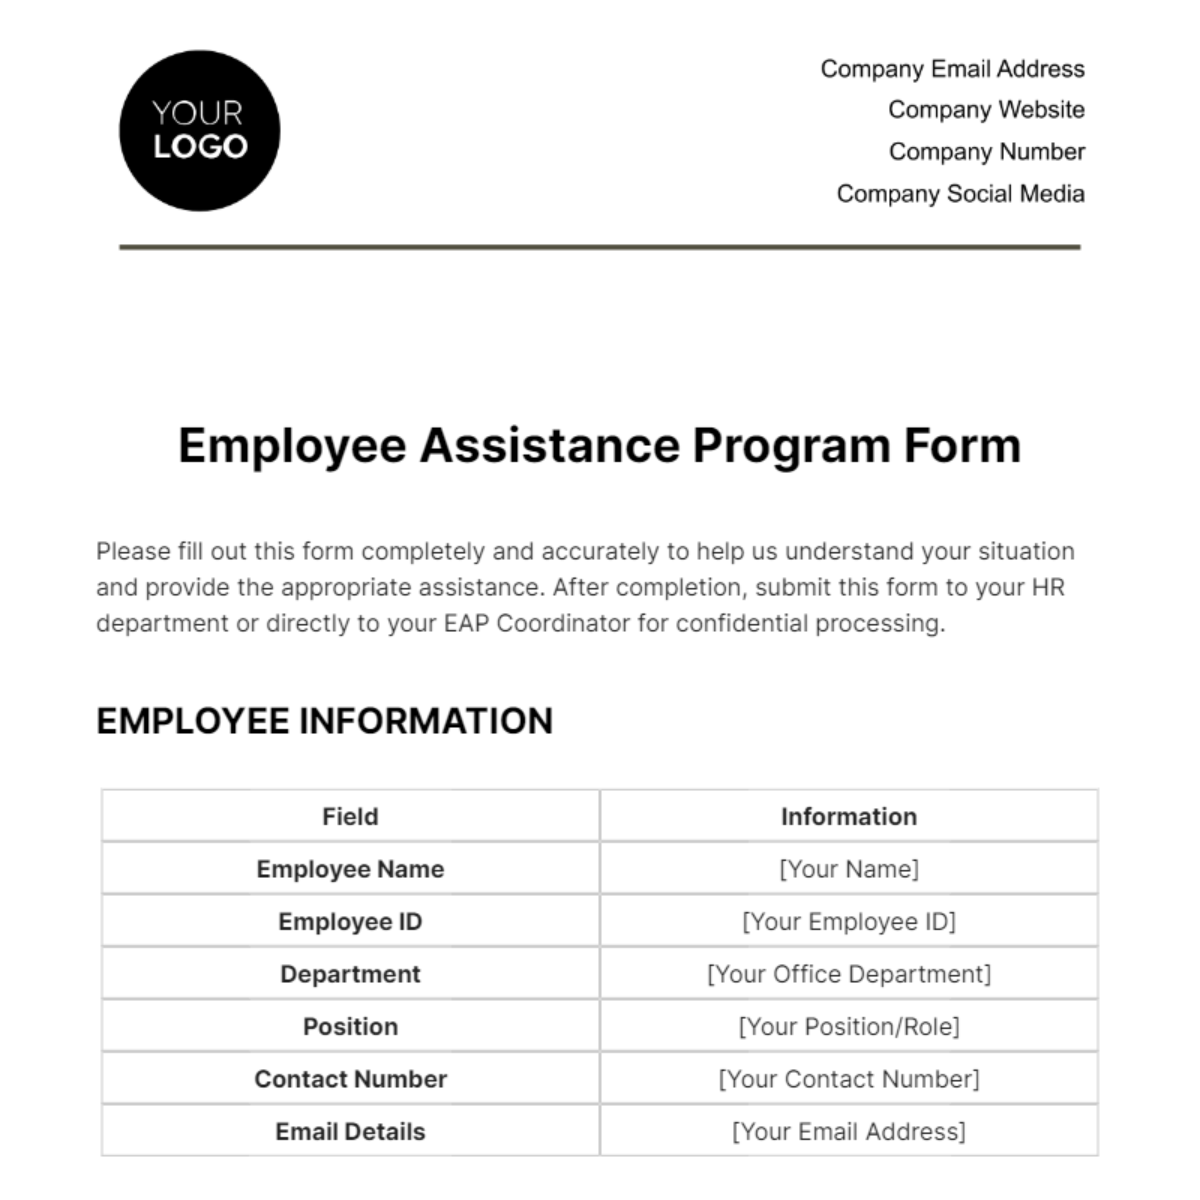 Employee Assistance Program Form Template